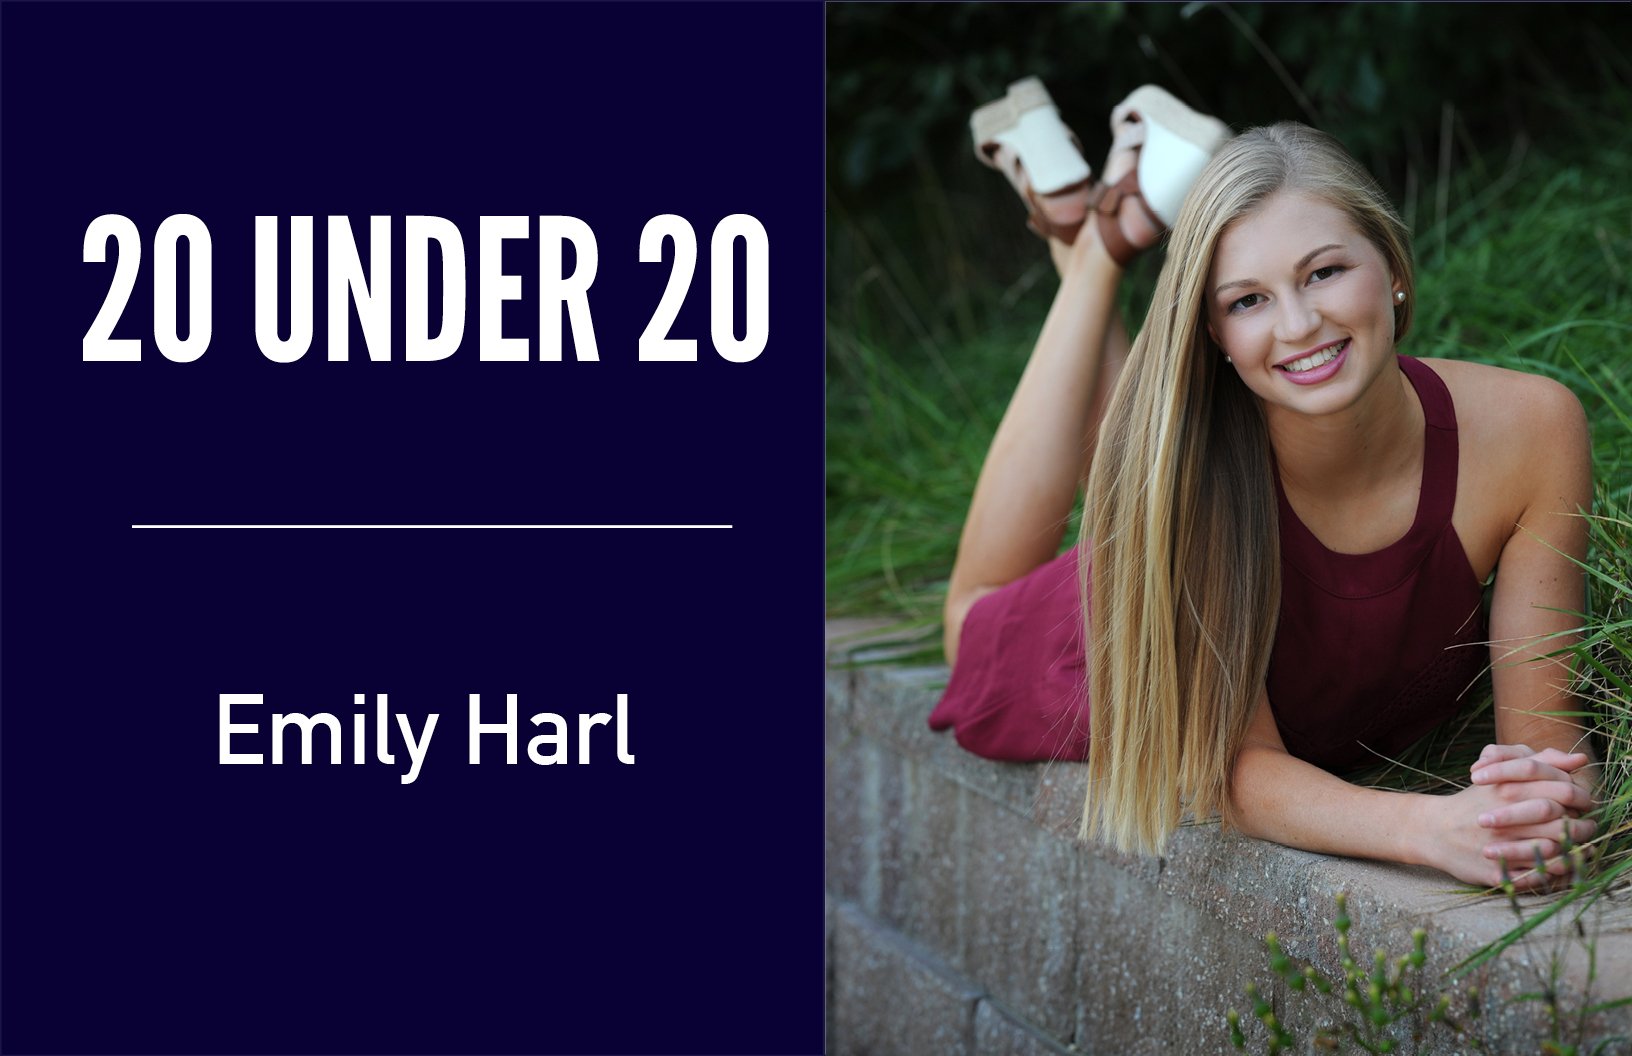 Emily-harl-20-under-20